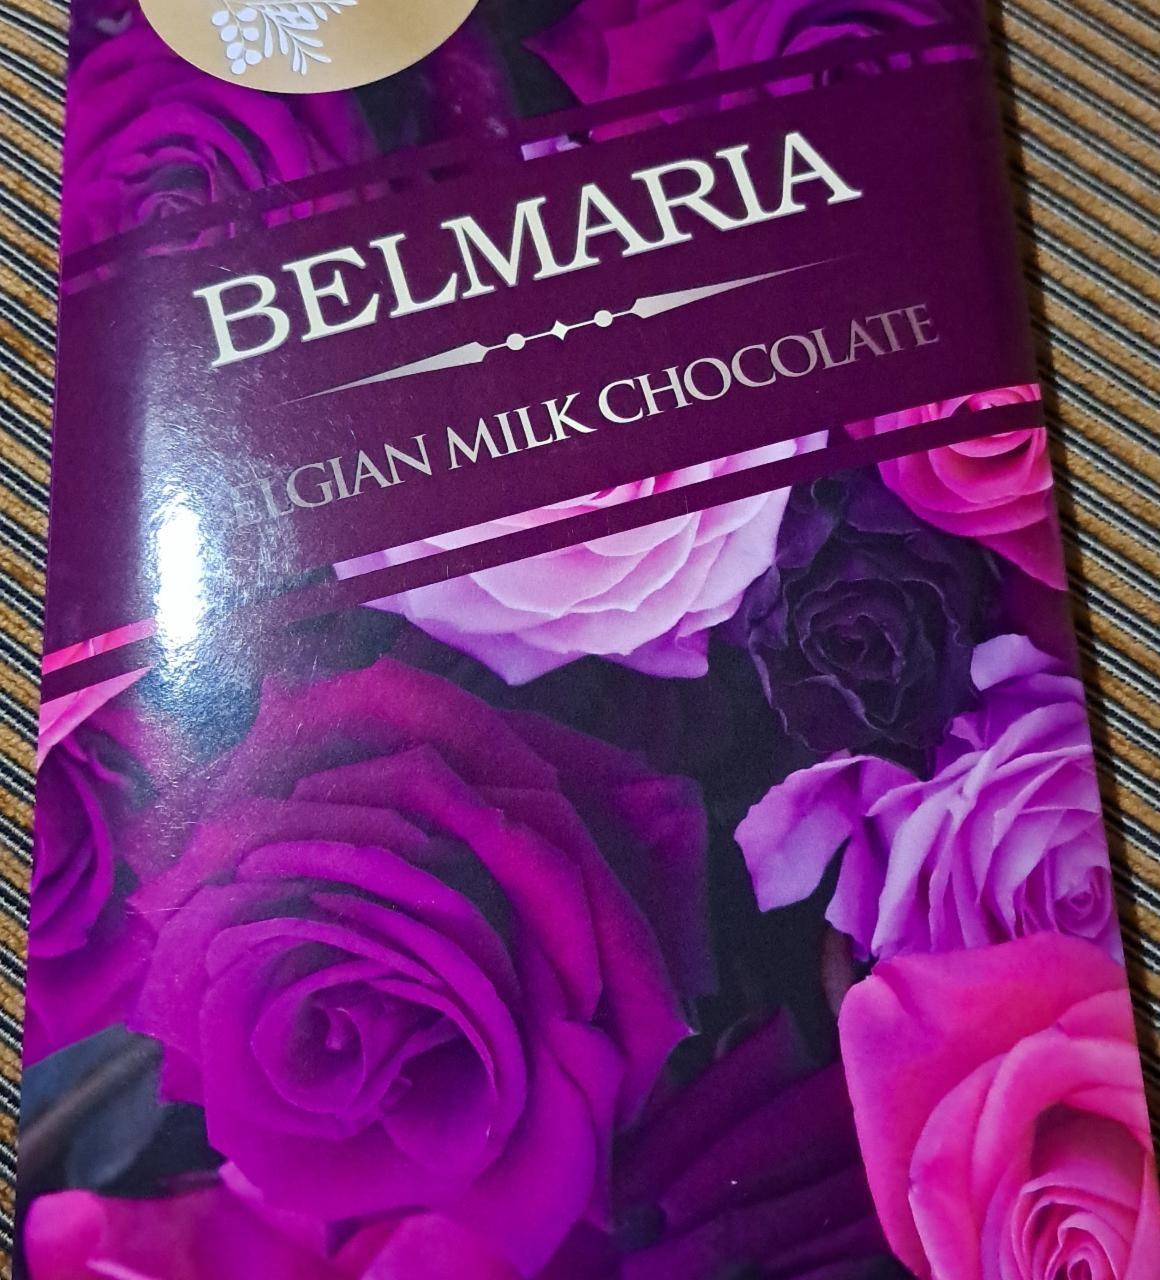 Fotografie - Belgian milk chocolate Belmaria